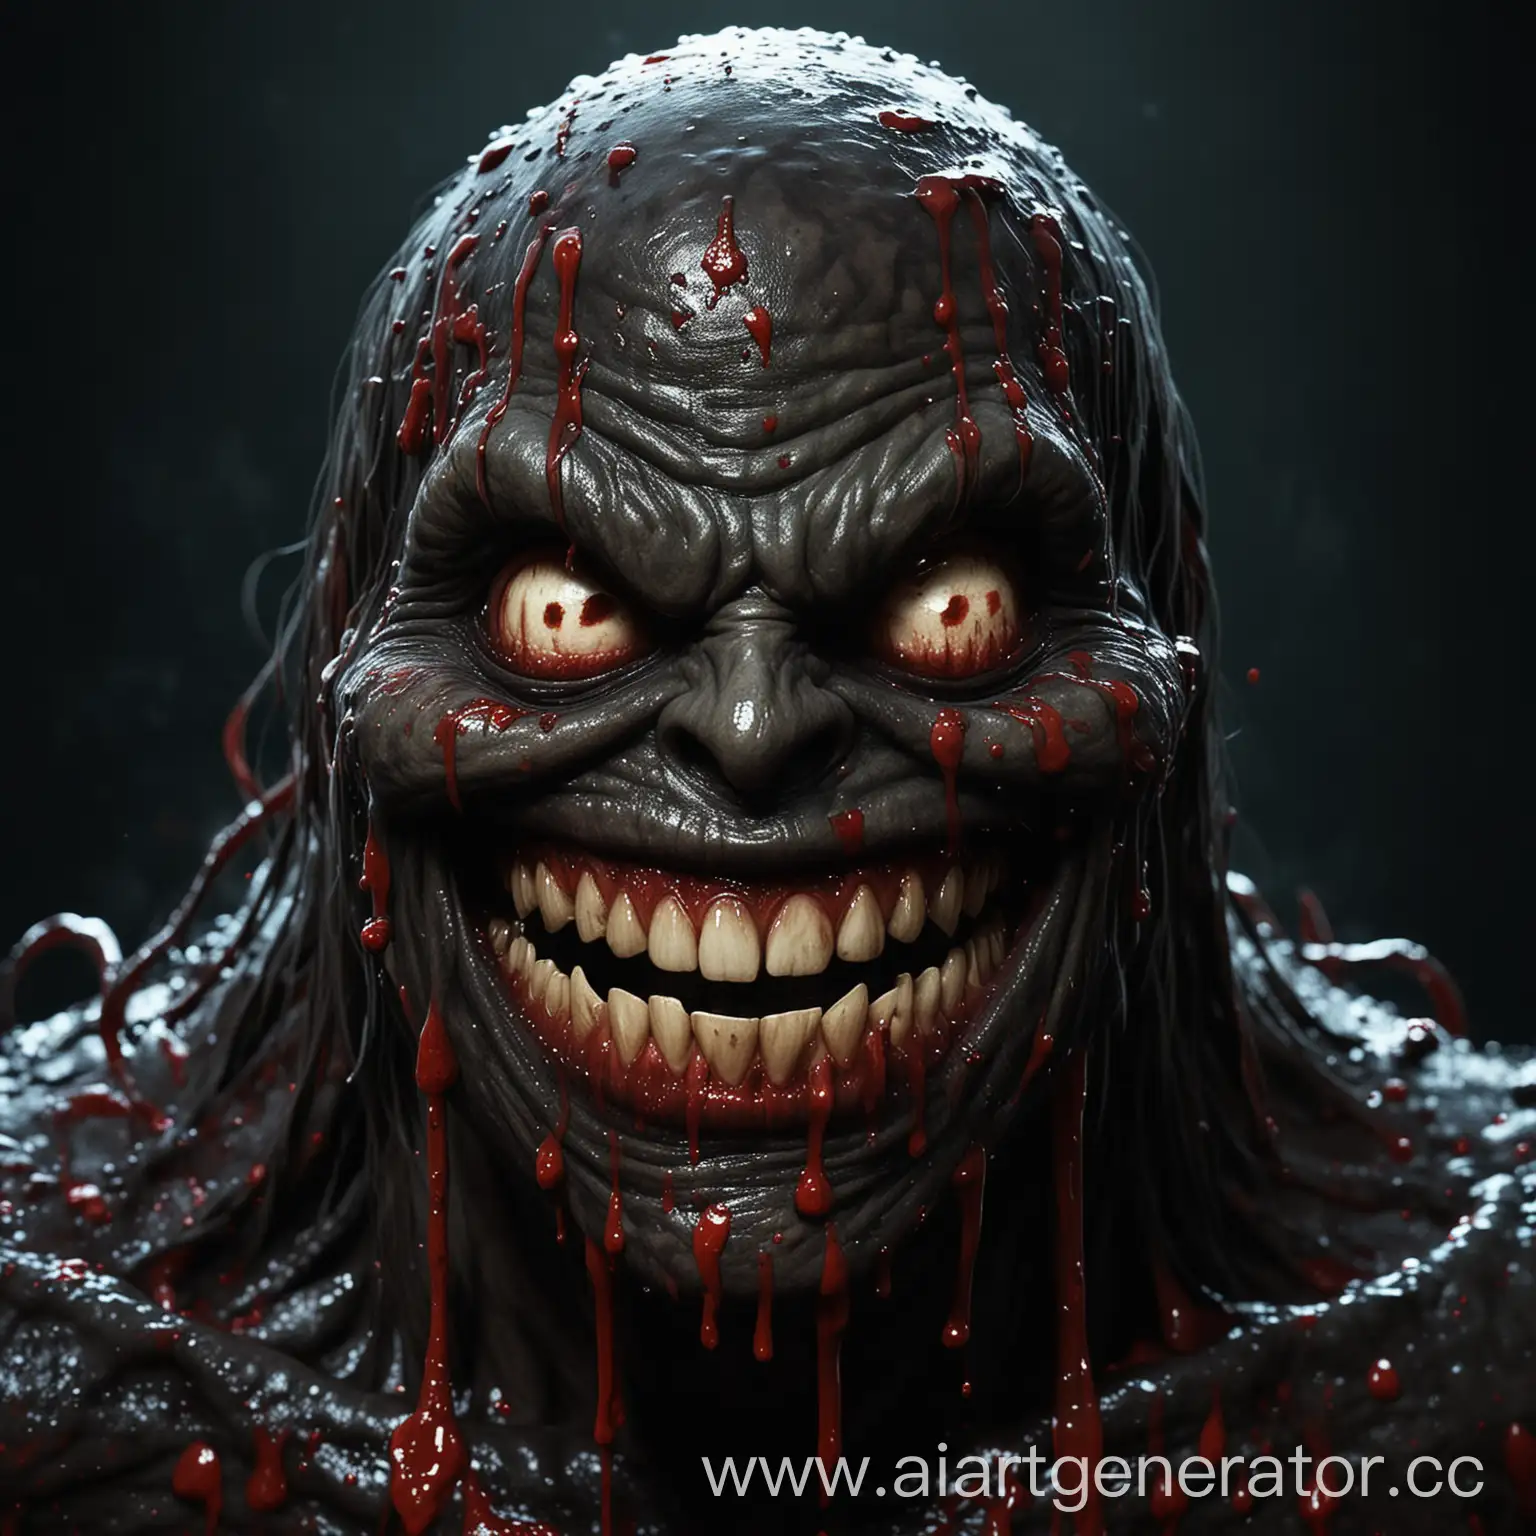 Evil-Slime-in-Blood-Sinister-RPG-Creature-on-Dark-Background